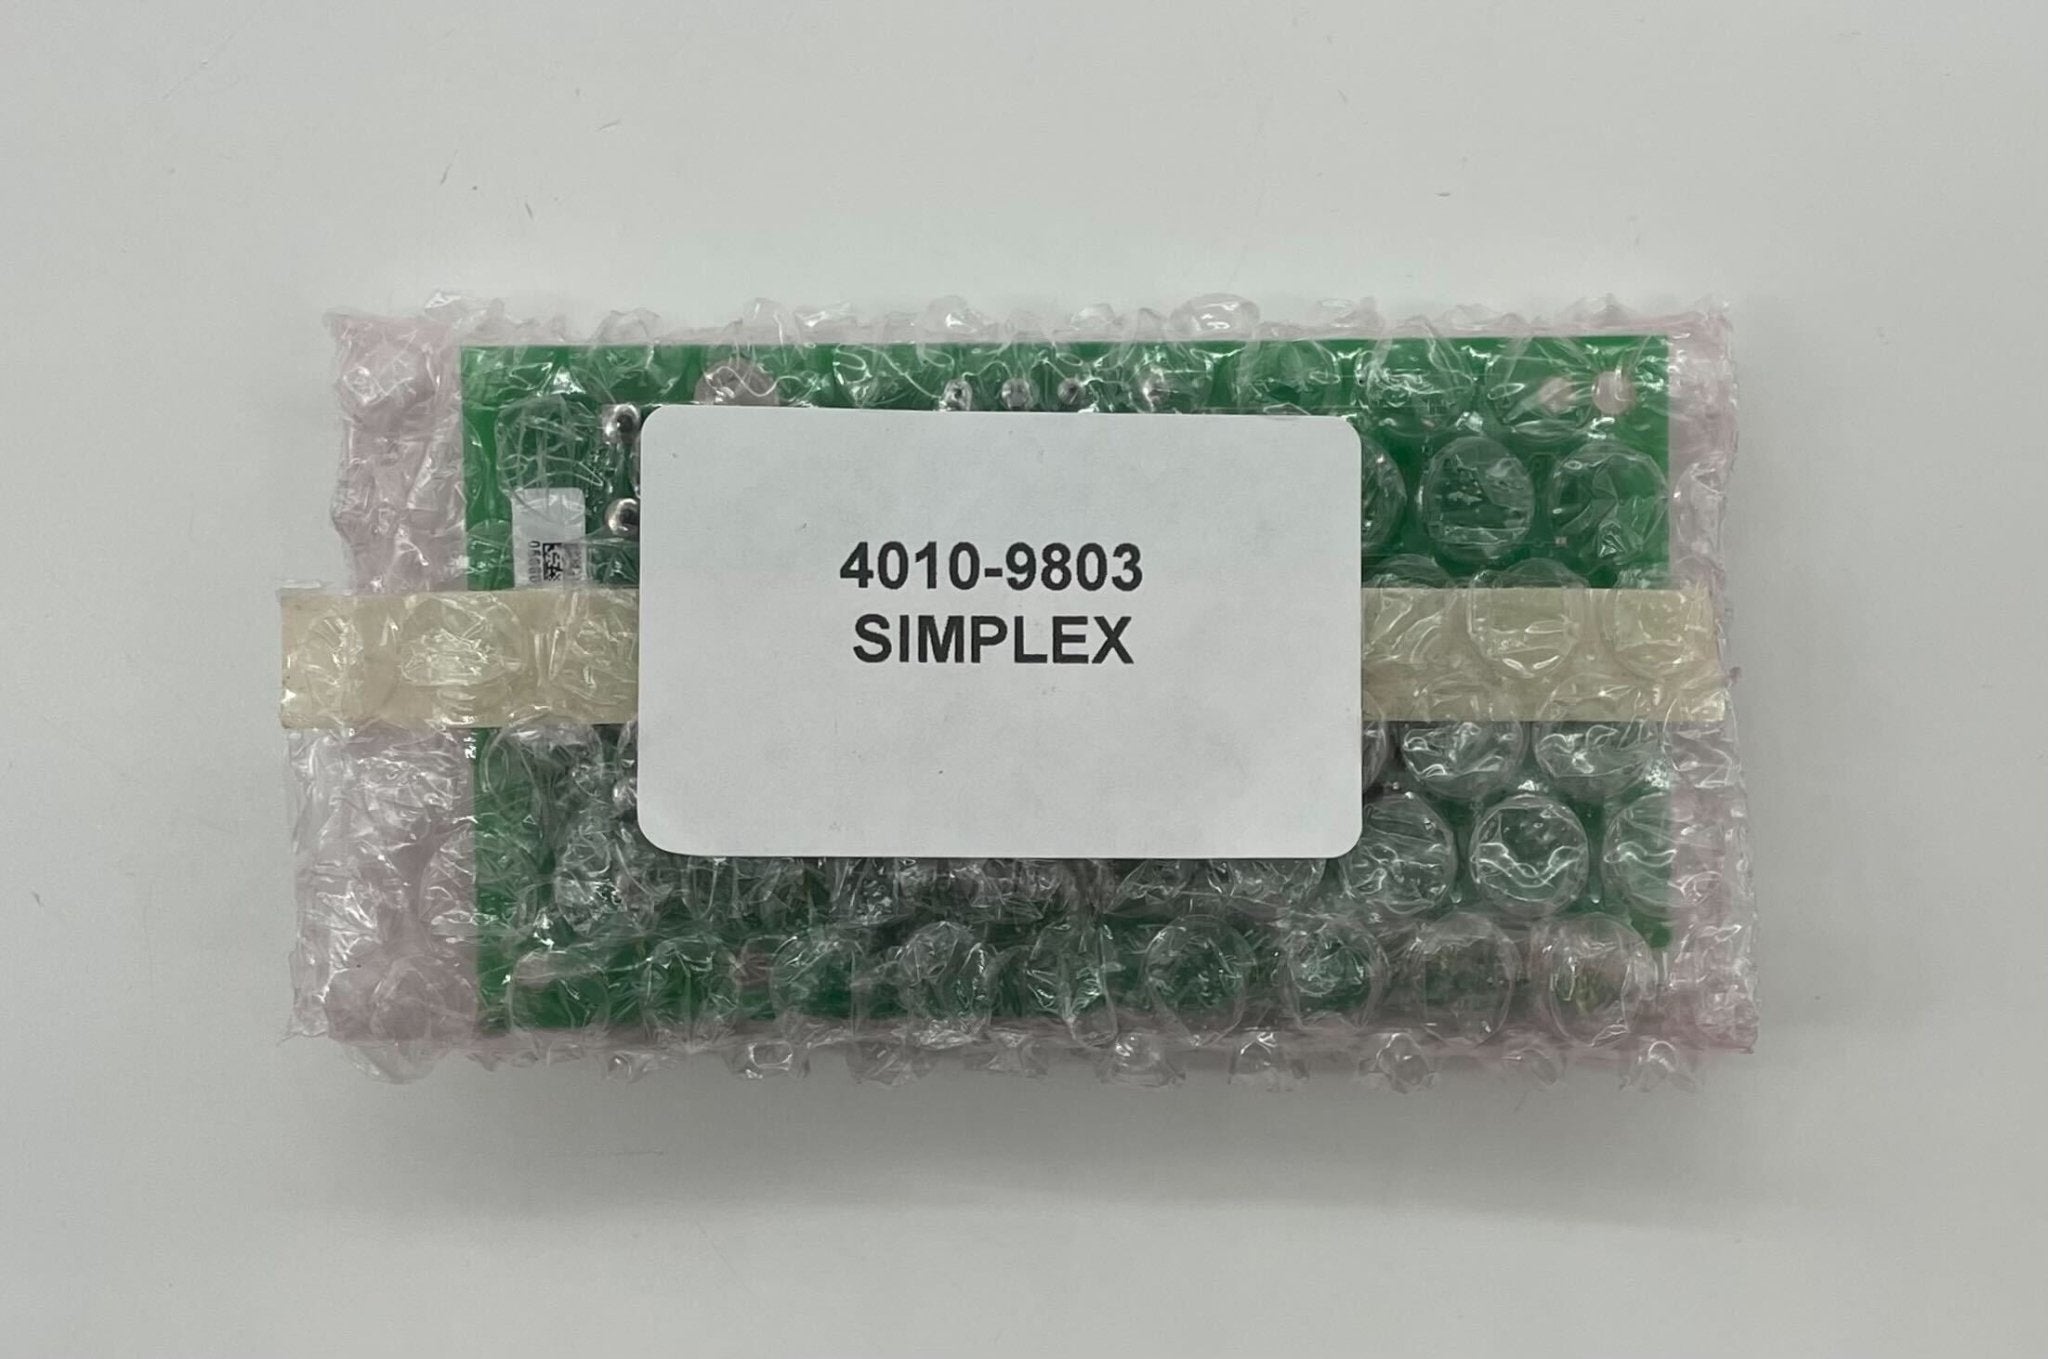 Simplex 4010-9803 - The Fire Alarm Supplier